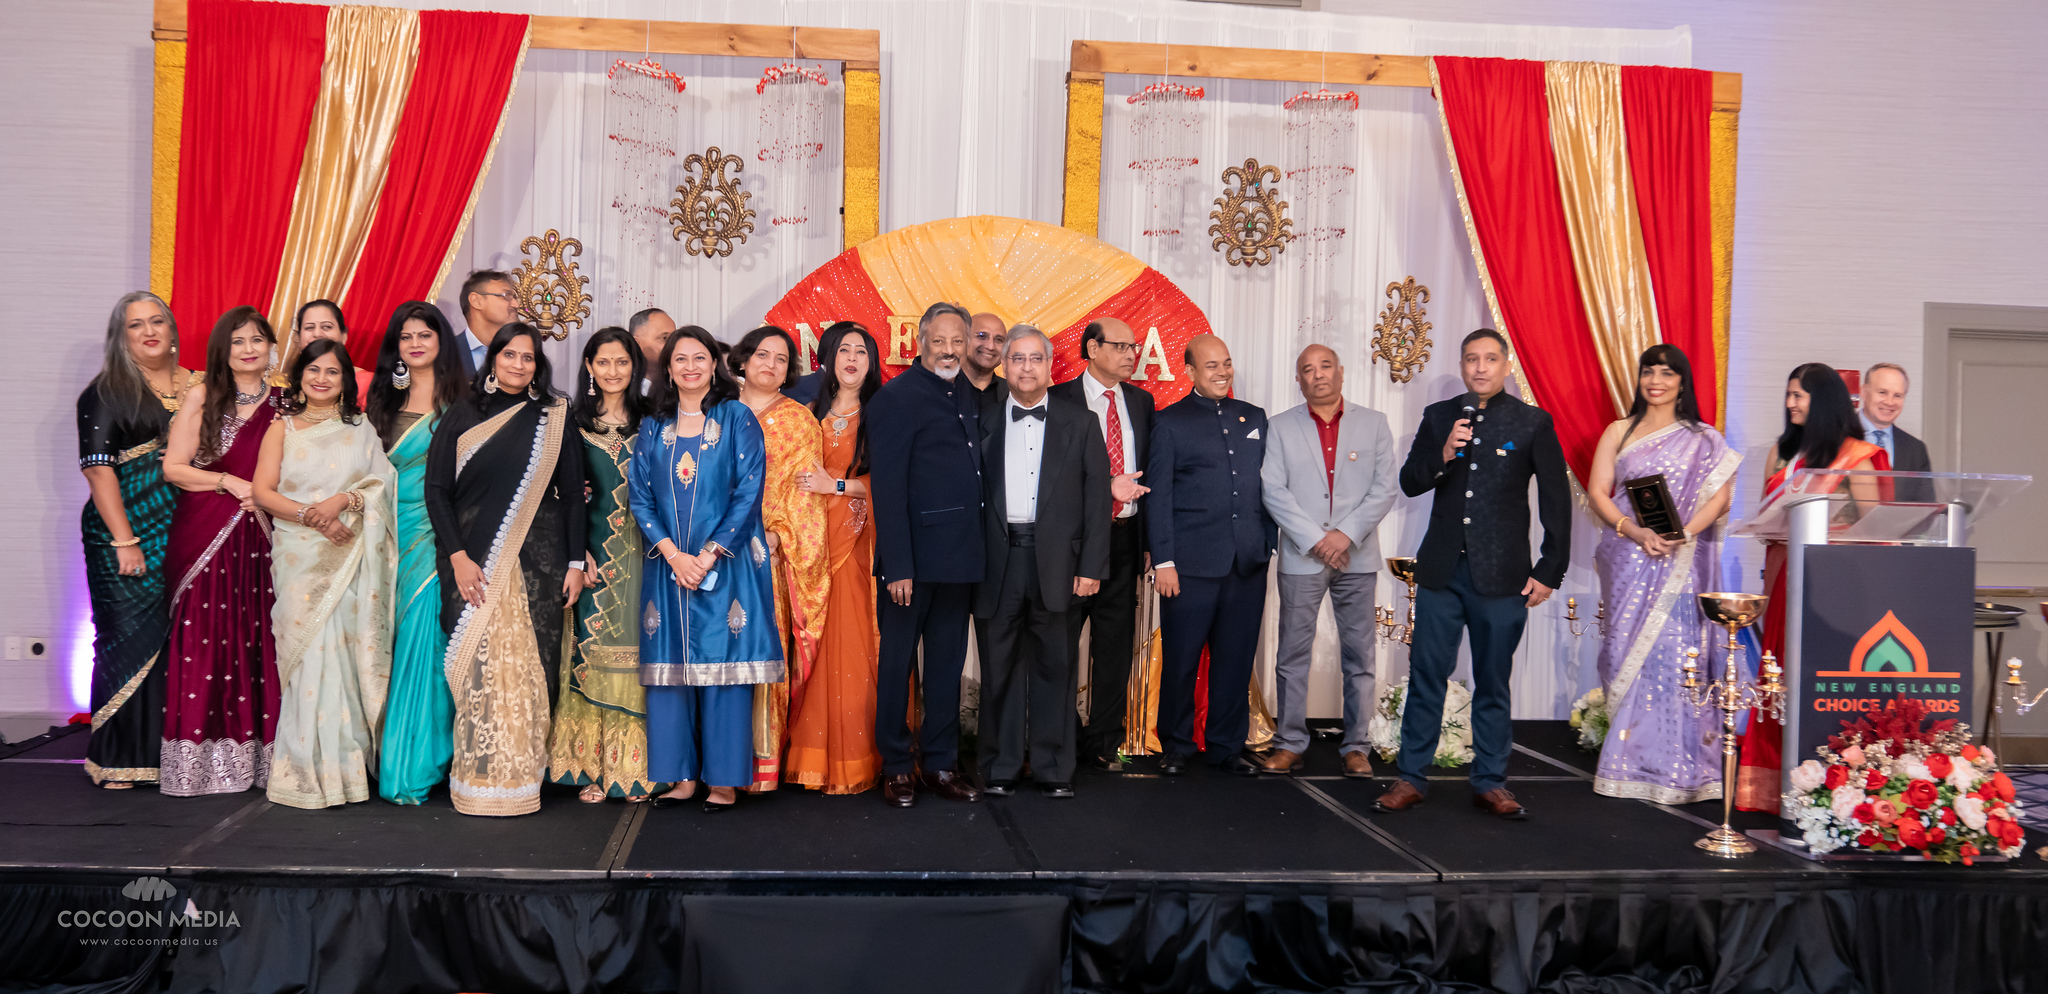 New England Choice Awards Gala In Boston Celebrates Accomplishments of Indian Americans (Cocoon Media)